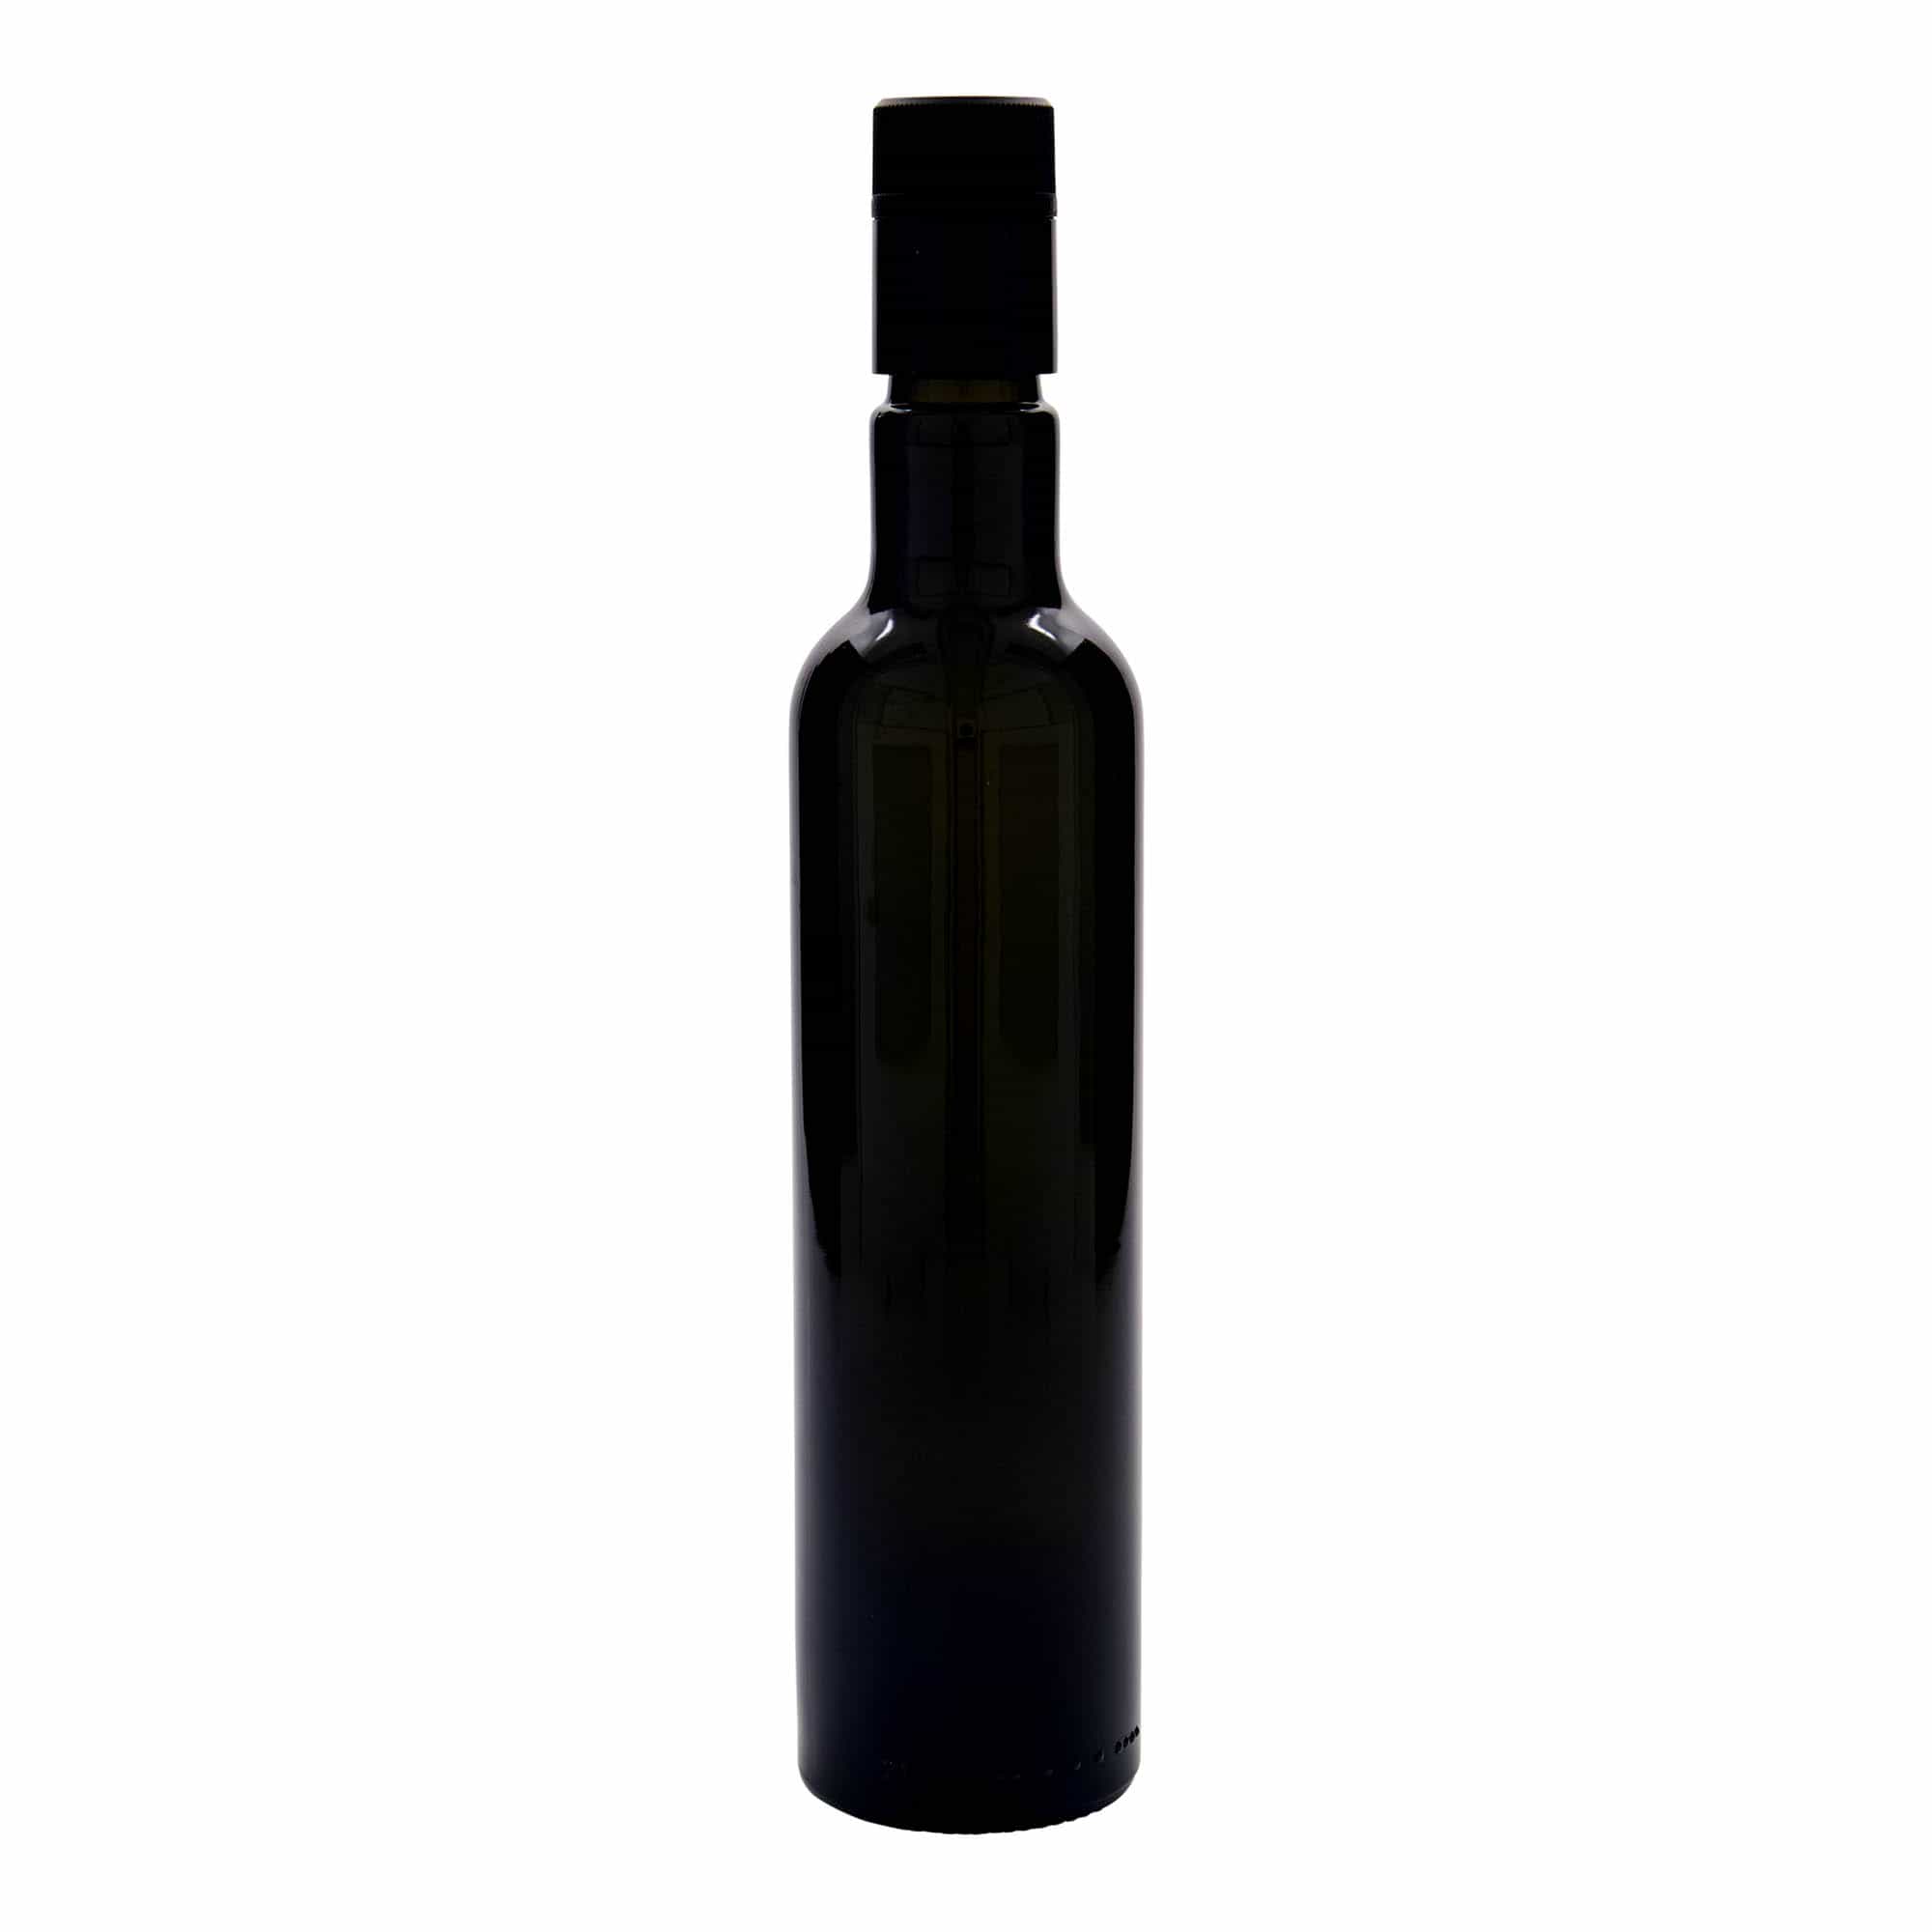 500 ml Bottiglia olio/aceto 'Willy New', vetro, verde antico, imboccatura: DOP